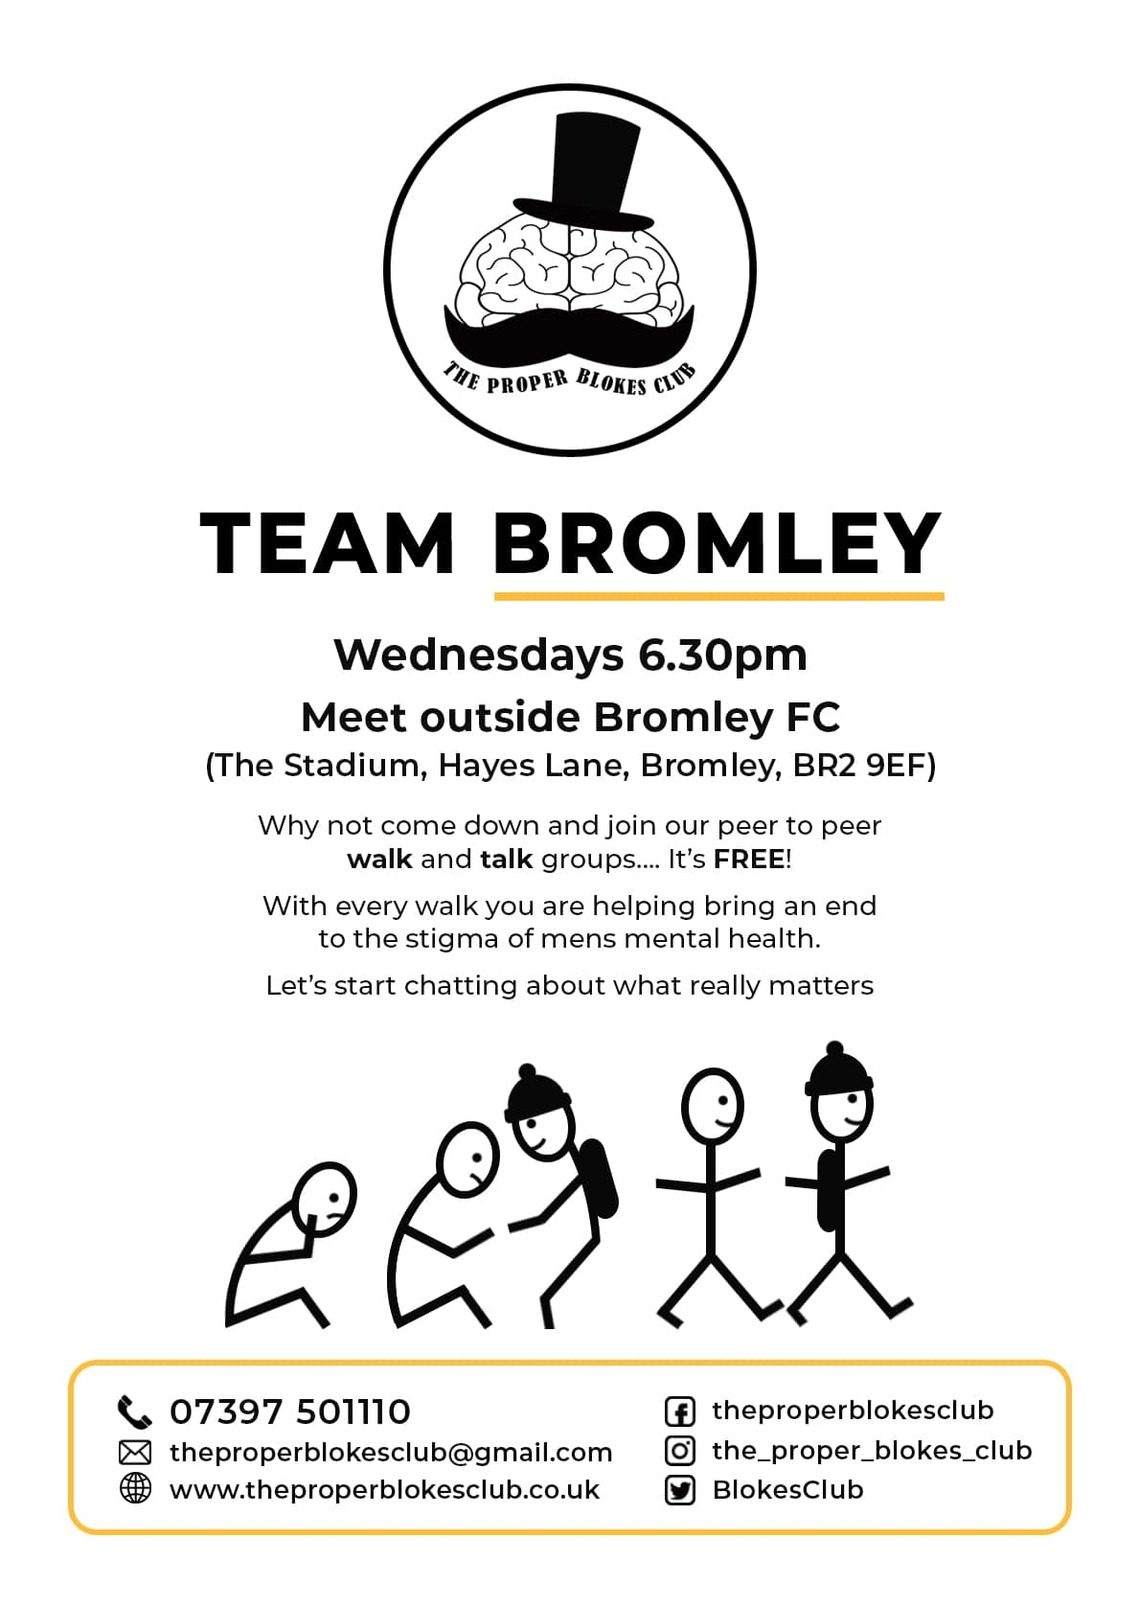 Team Bromley proper blokes